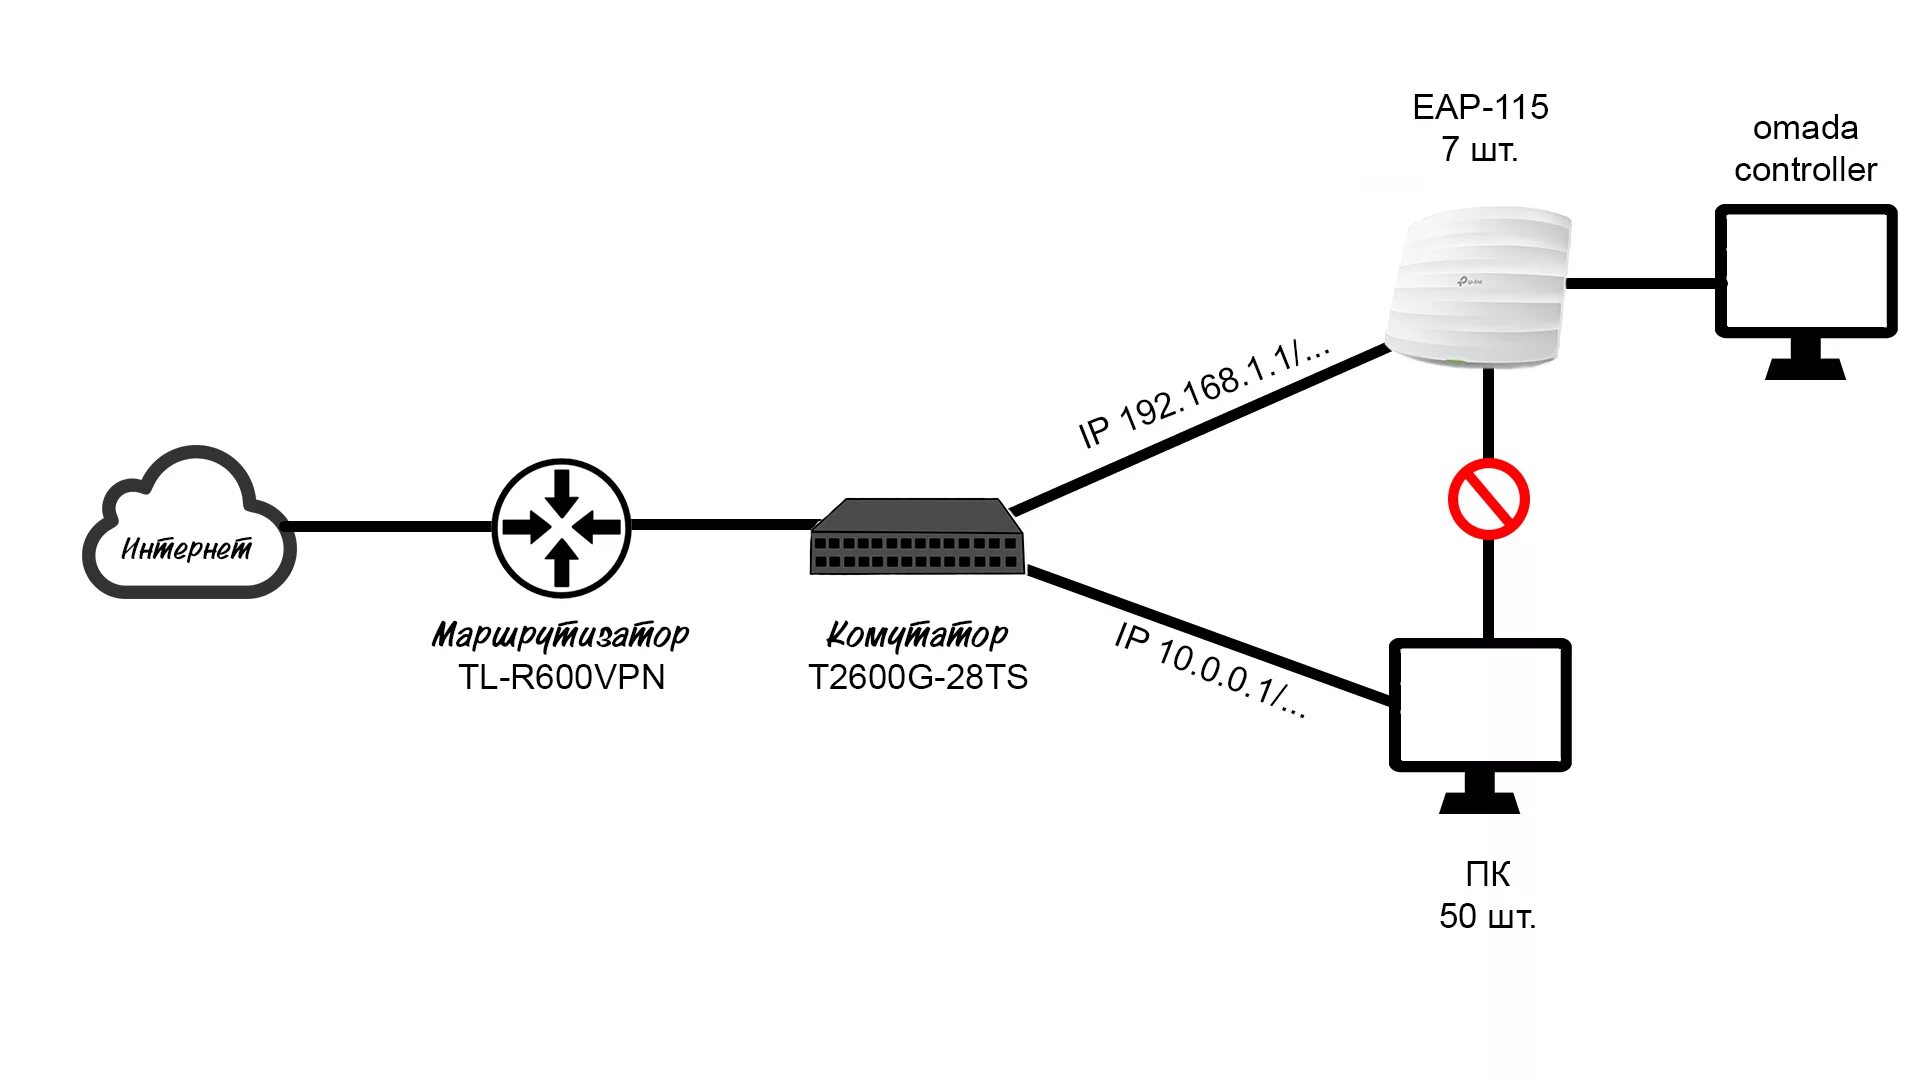 Plant vpn. TP-link t2600g-28ts. Виртуальная частная сеть (VPN). R600vpn VLAN VPN. VPN маршрутизатор omada.